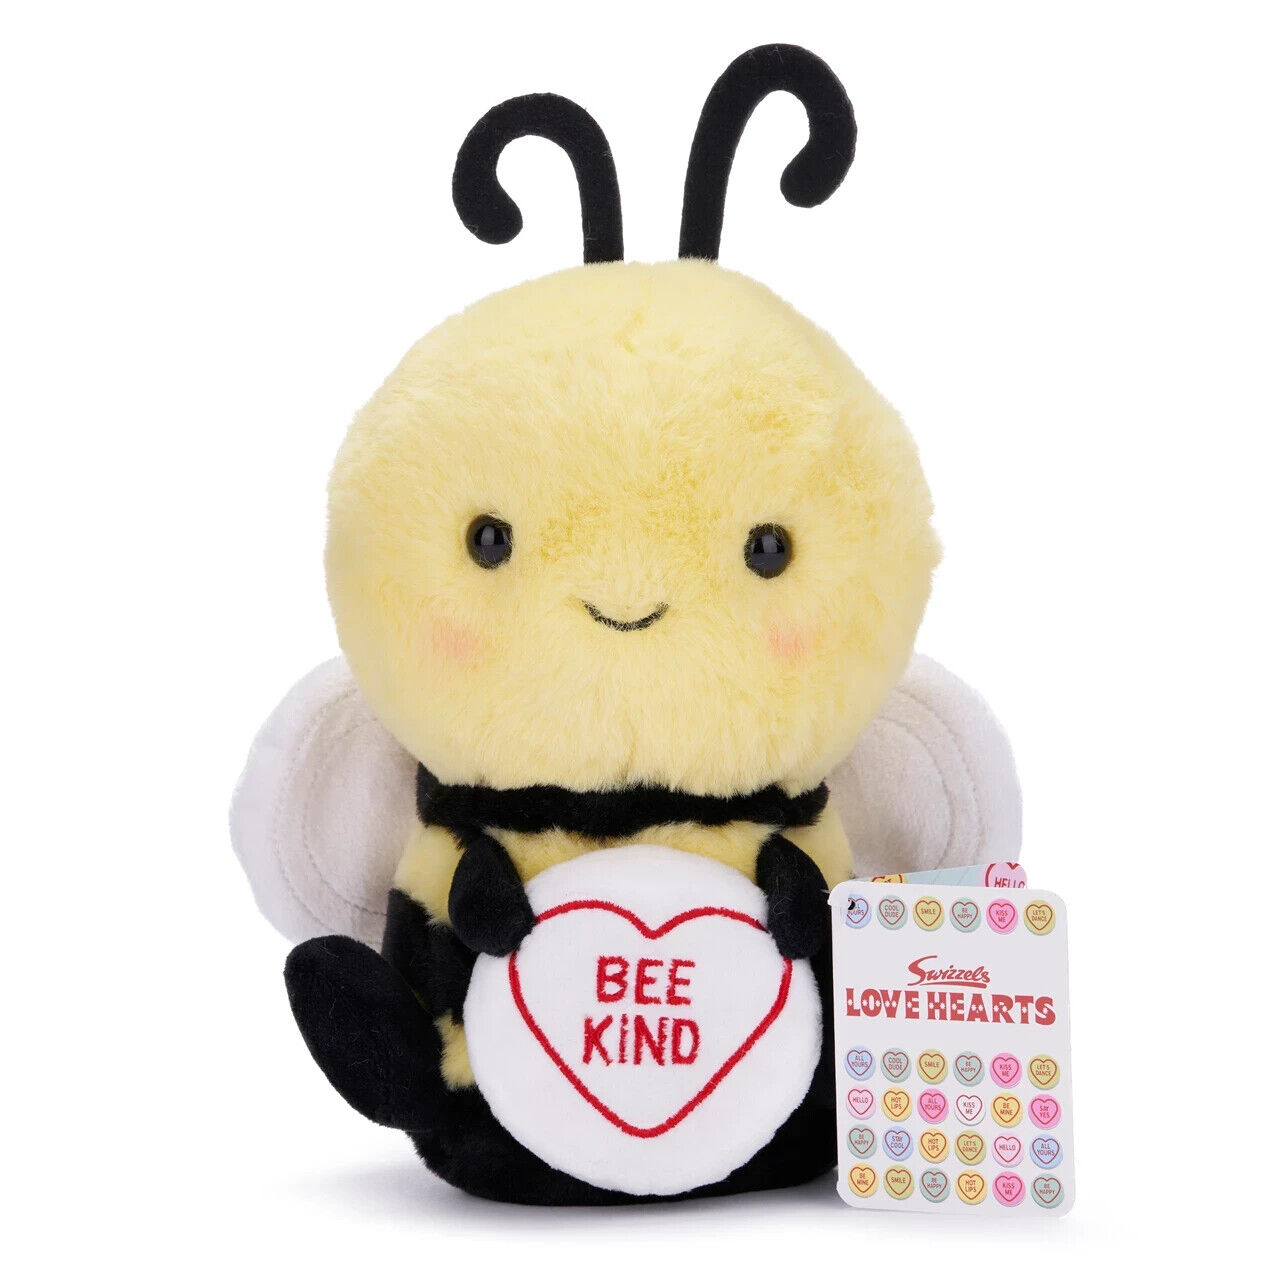 Bee Swizzels Love Hearts 18cm Plush Toy - Bee Kind Teddy - Soft & Cuddly